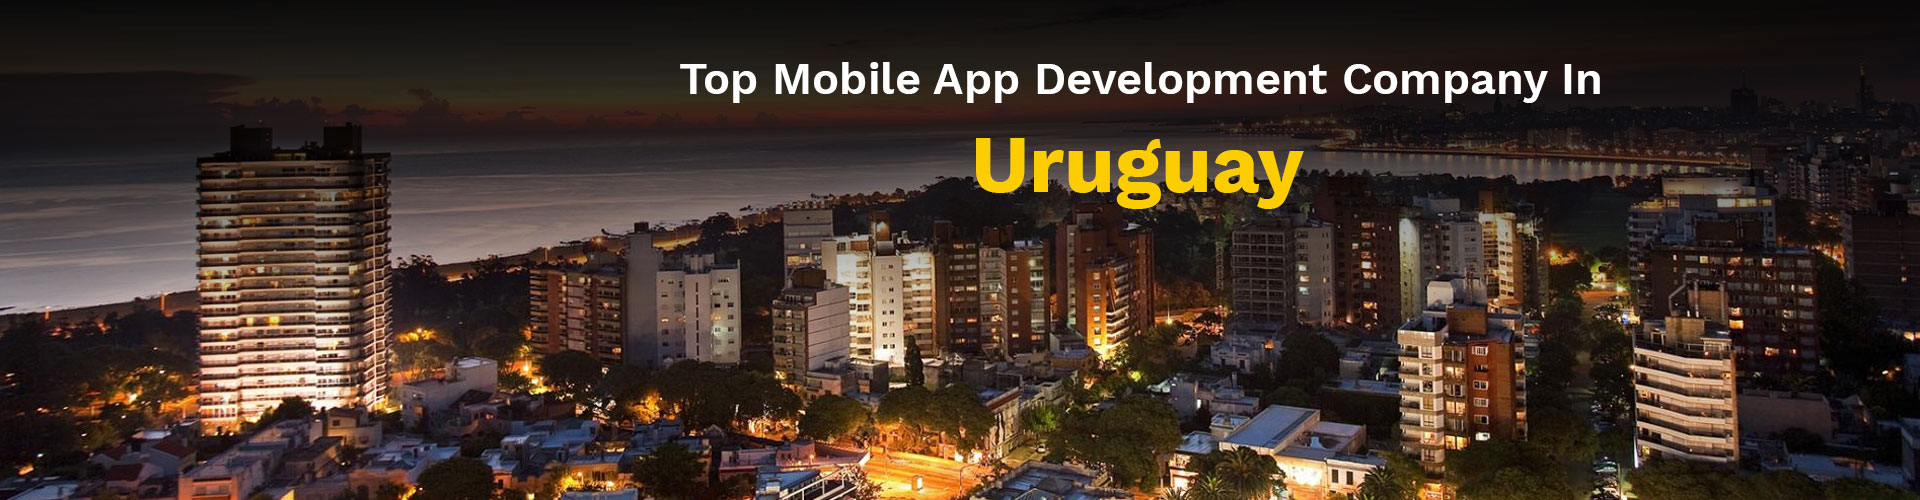 mobile app development company uruguay